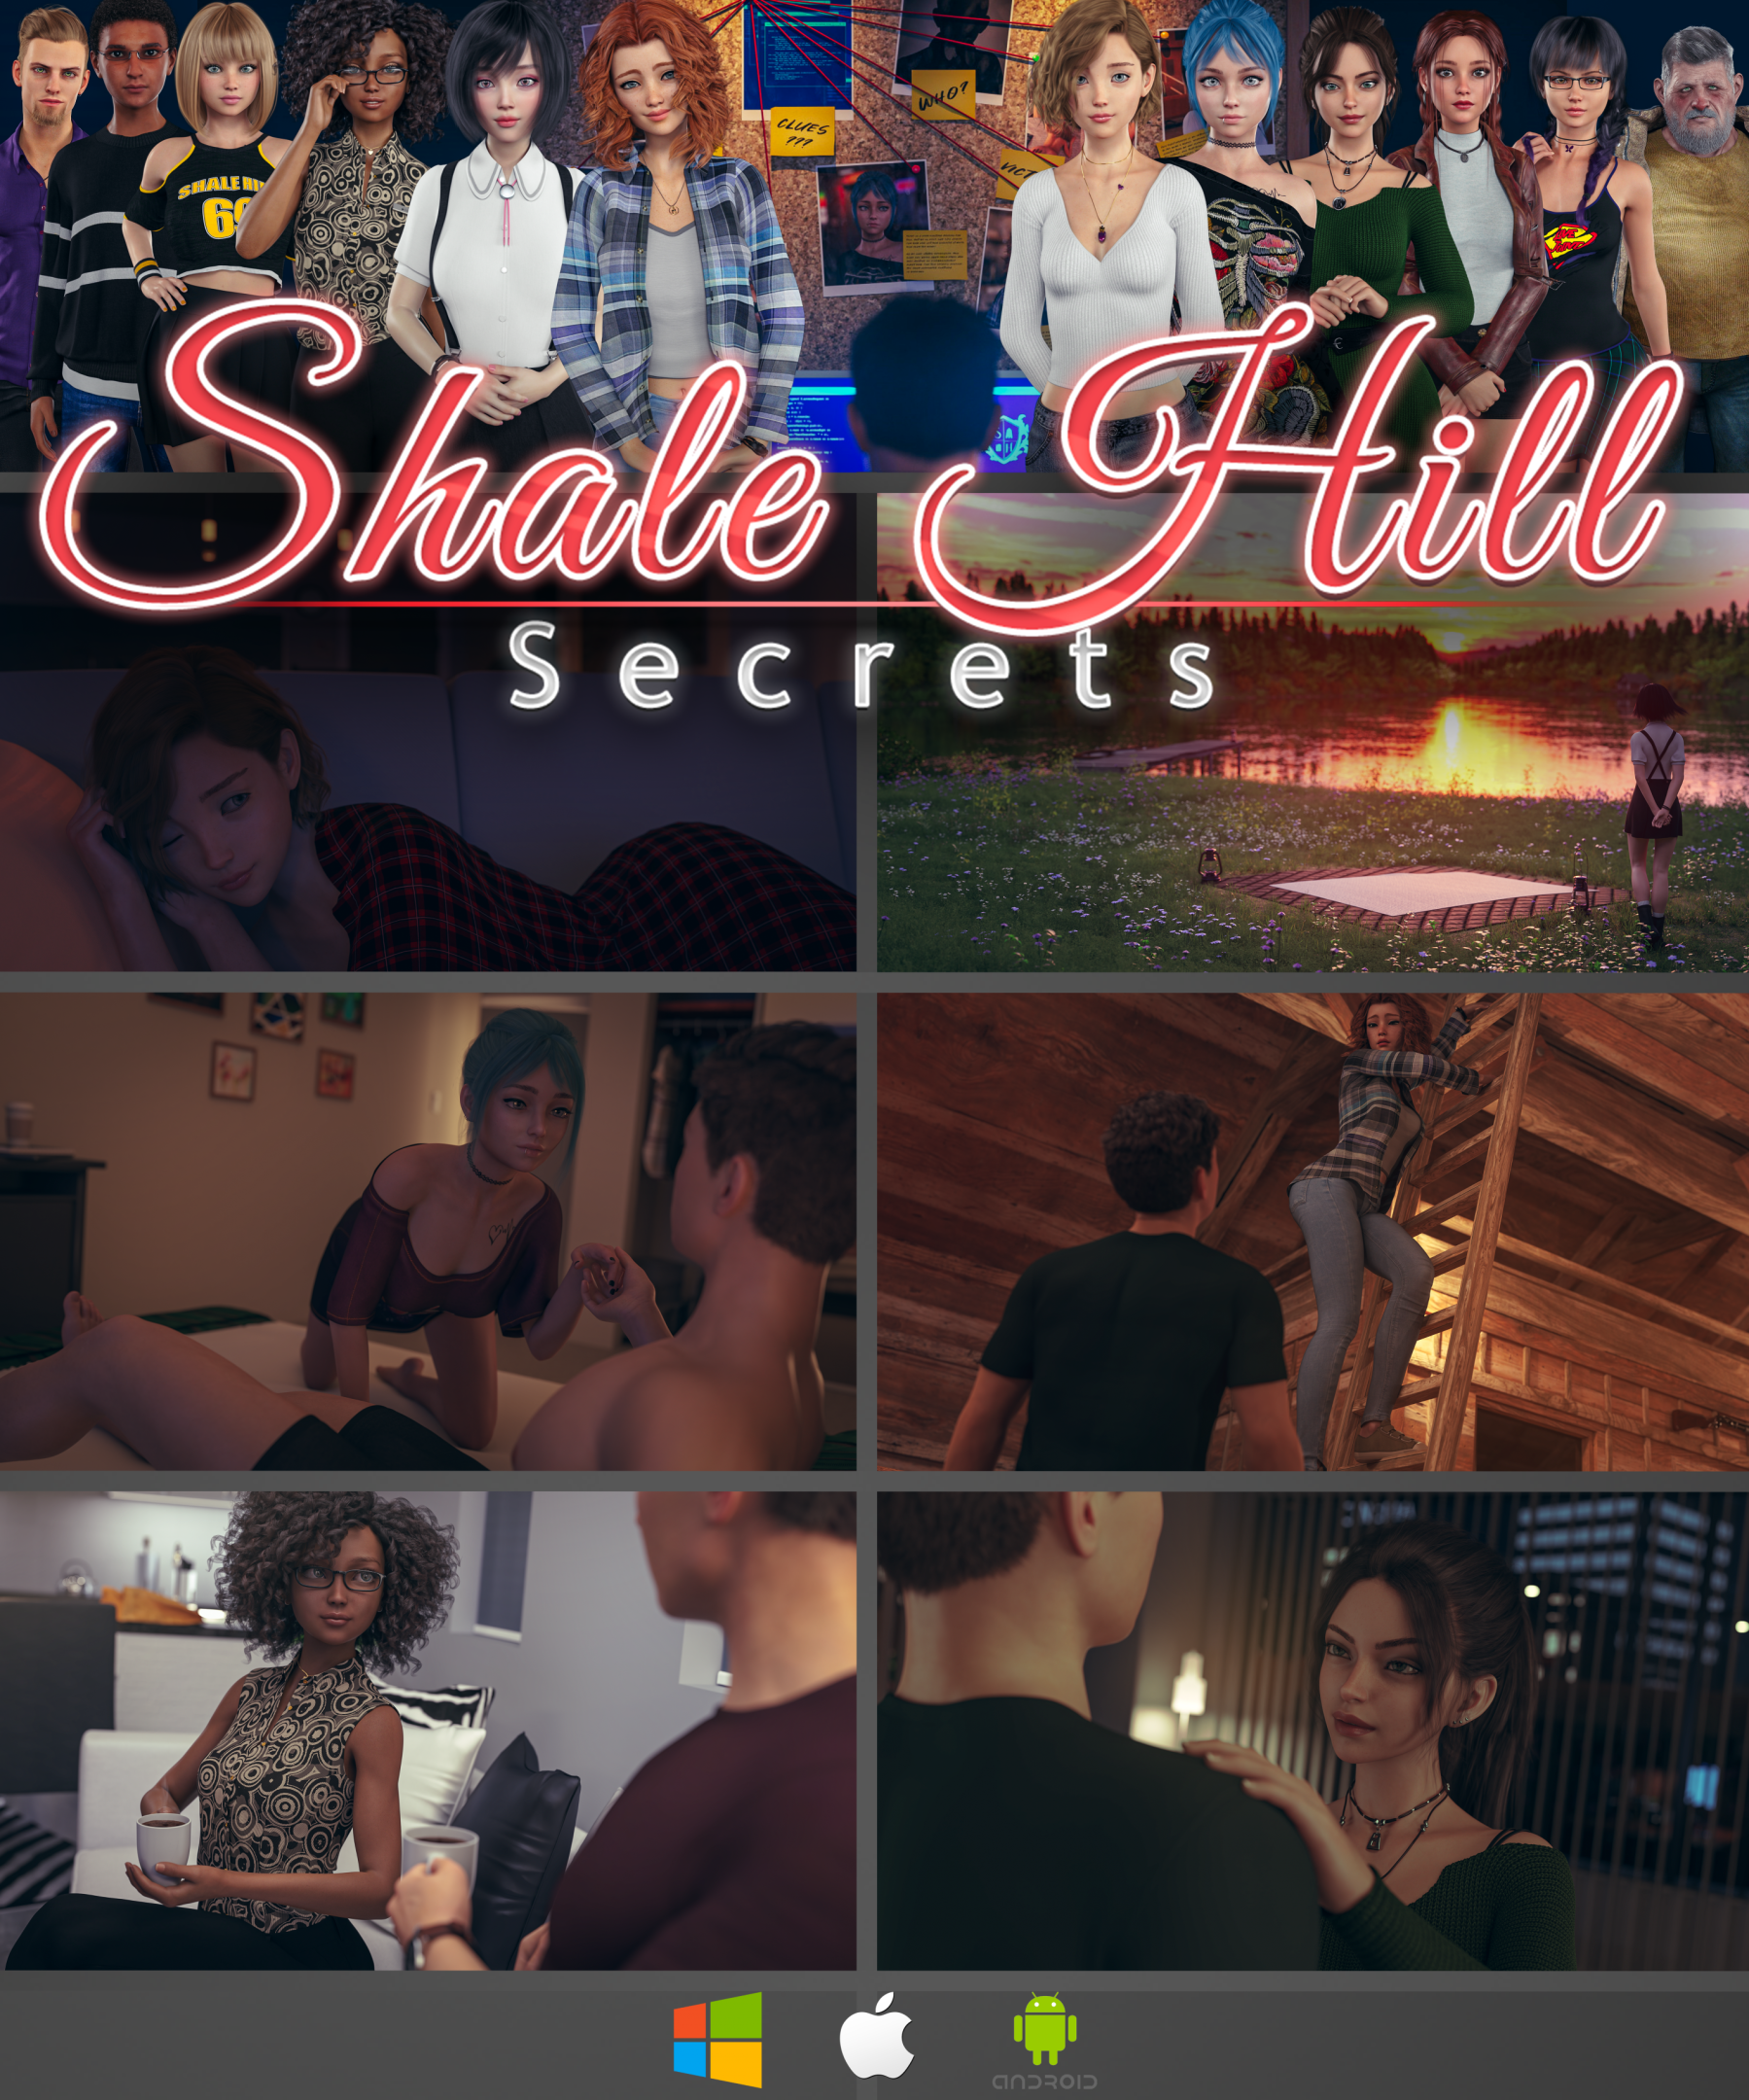 Shale hill secrets